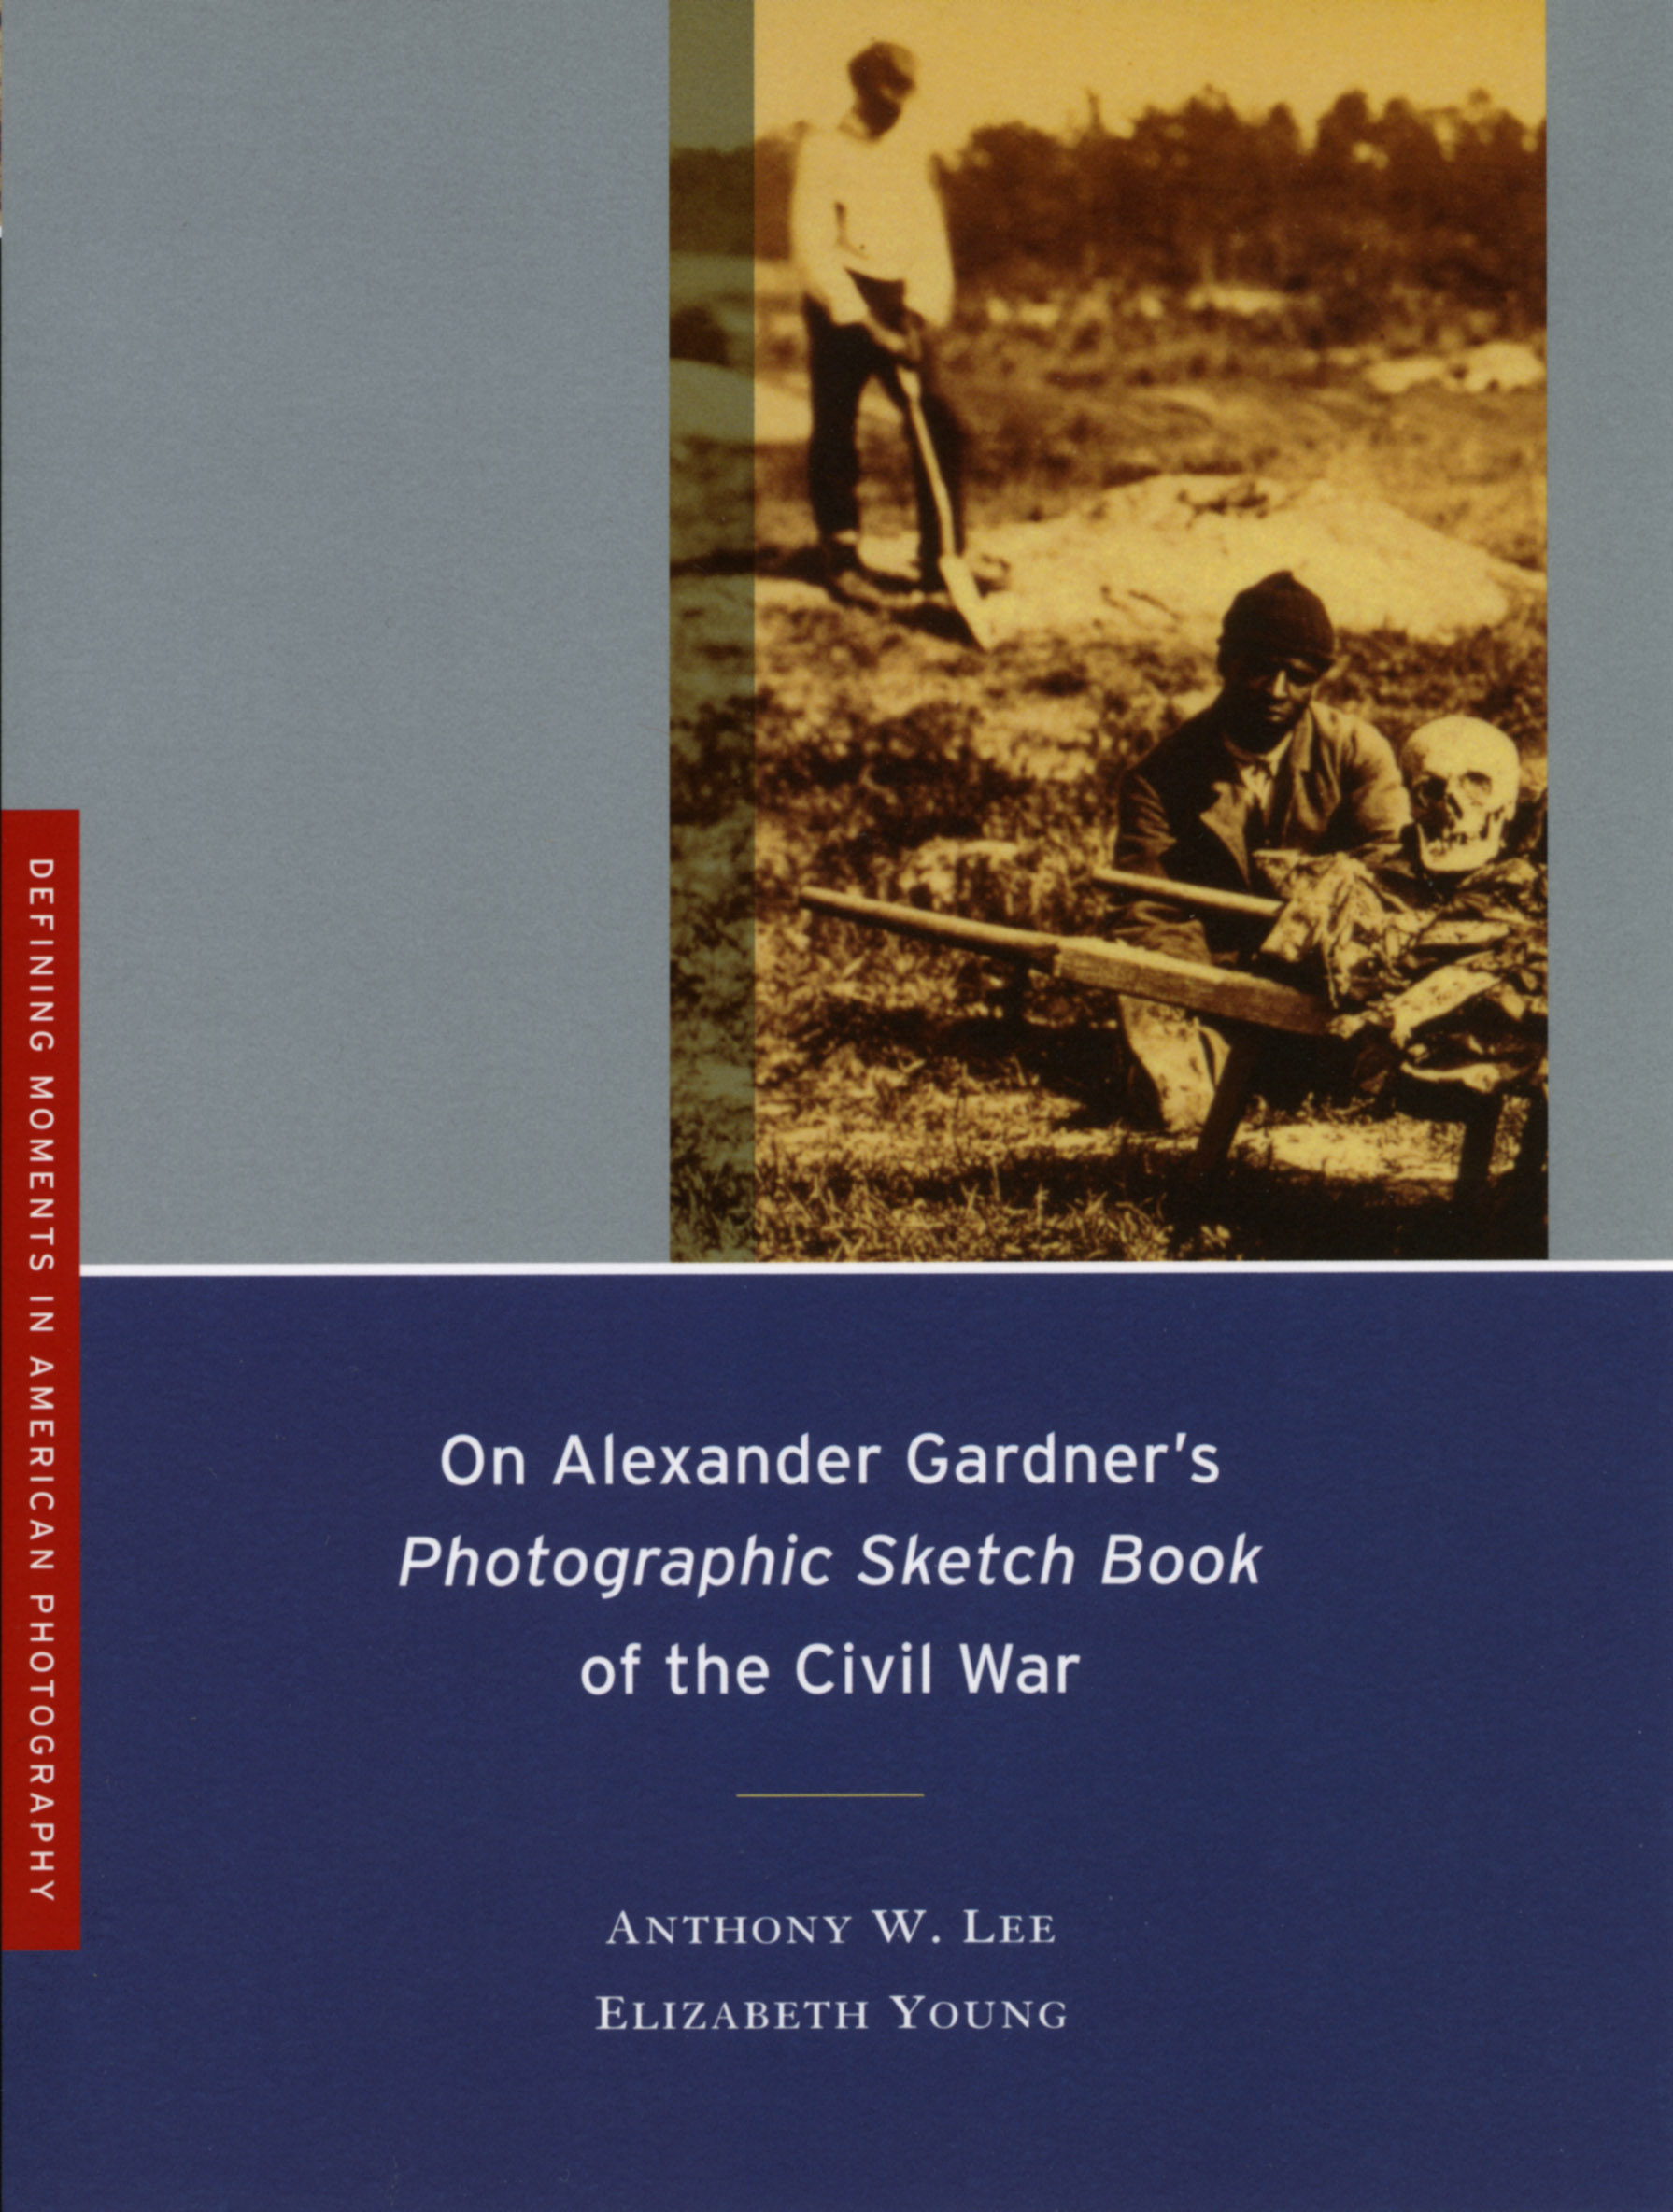 DMAP-on-alexander-gardners-photographic-sketchbook-of-the-civil-war.jpg